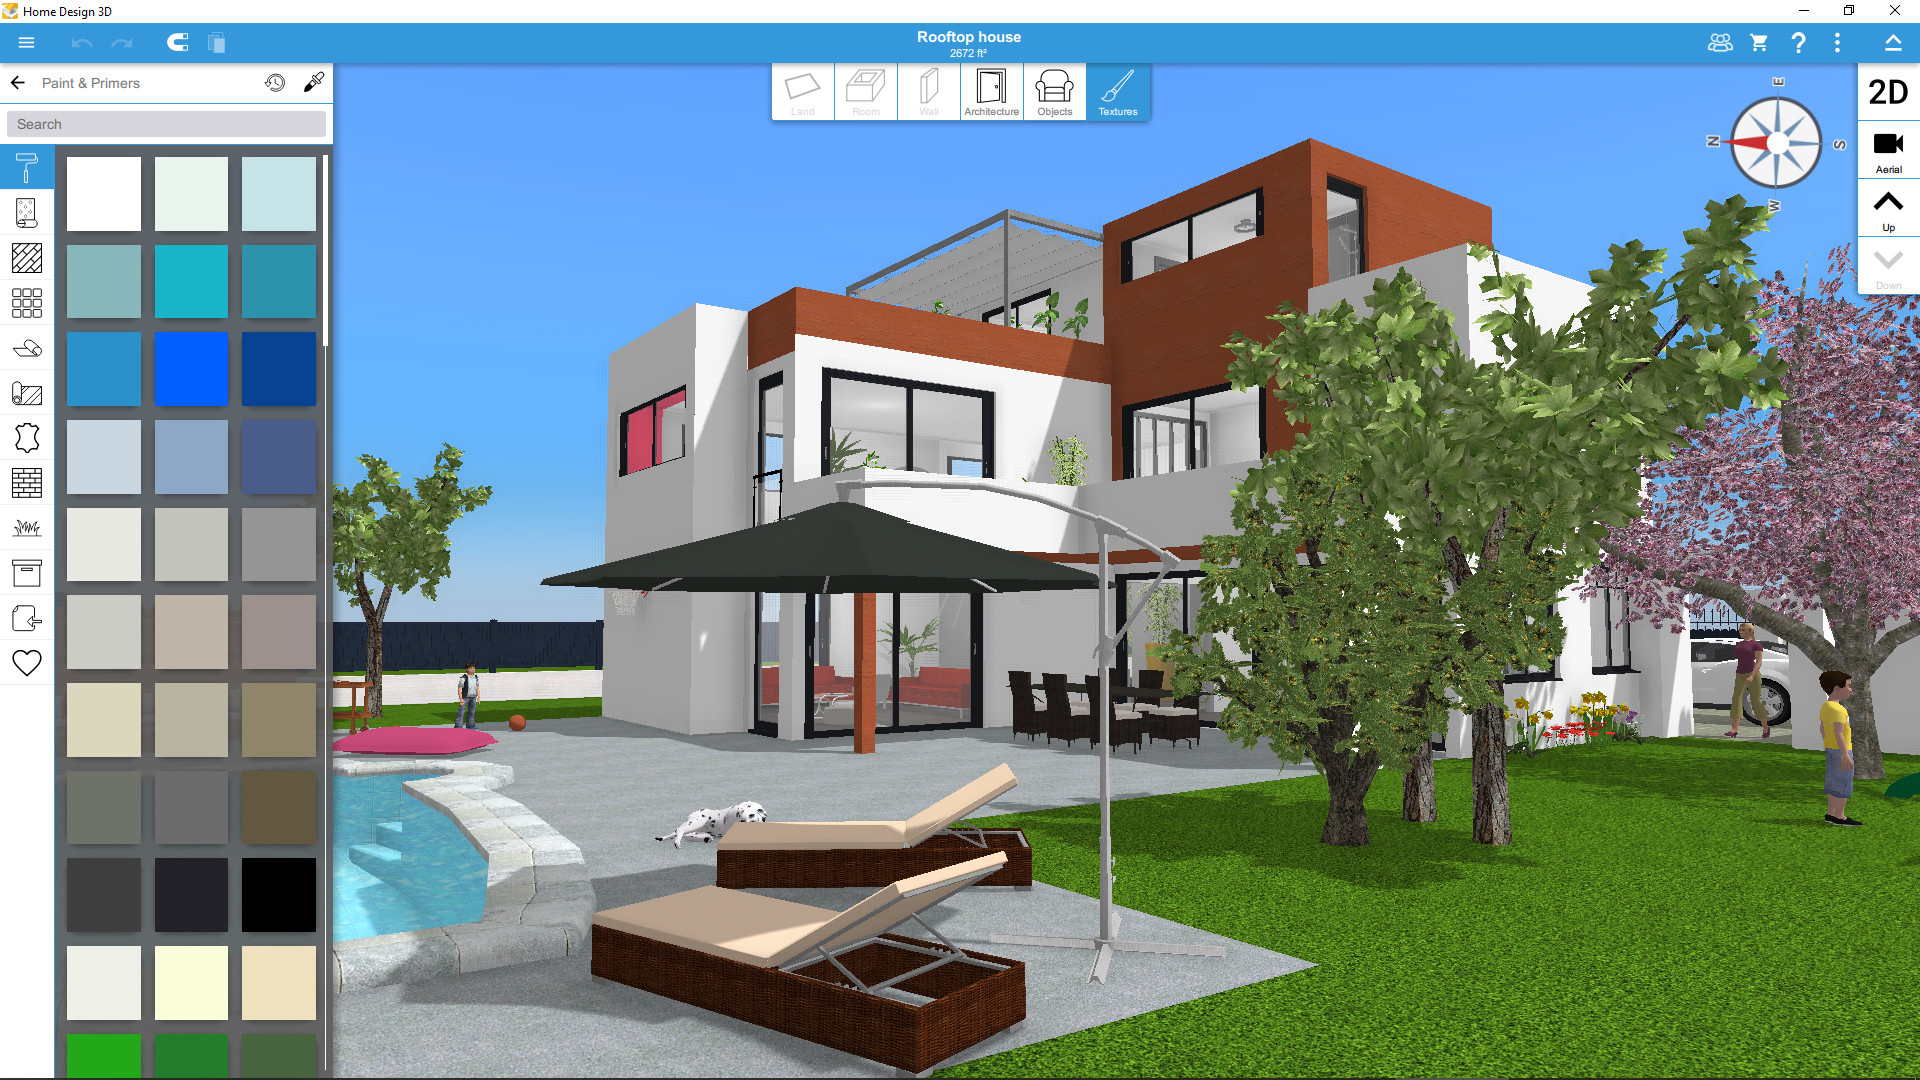 Home Design 3d On Steam